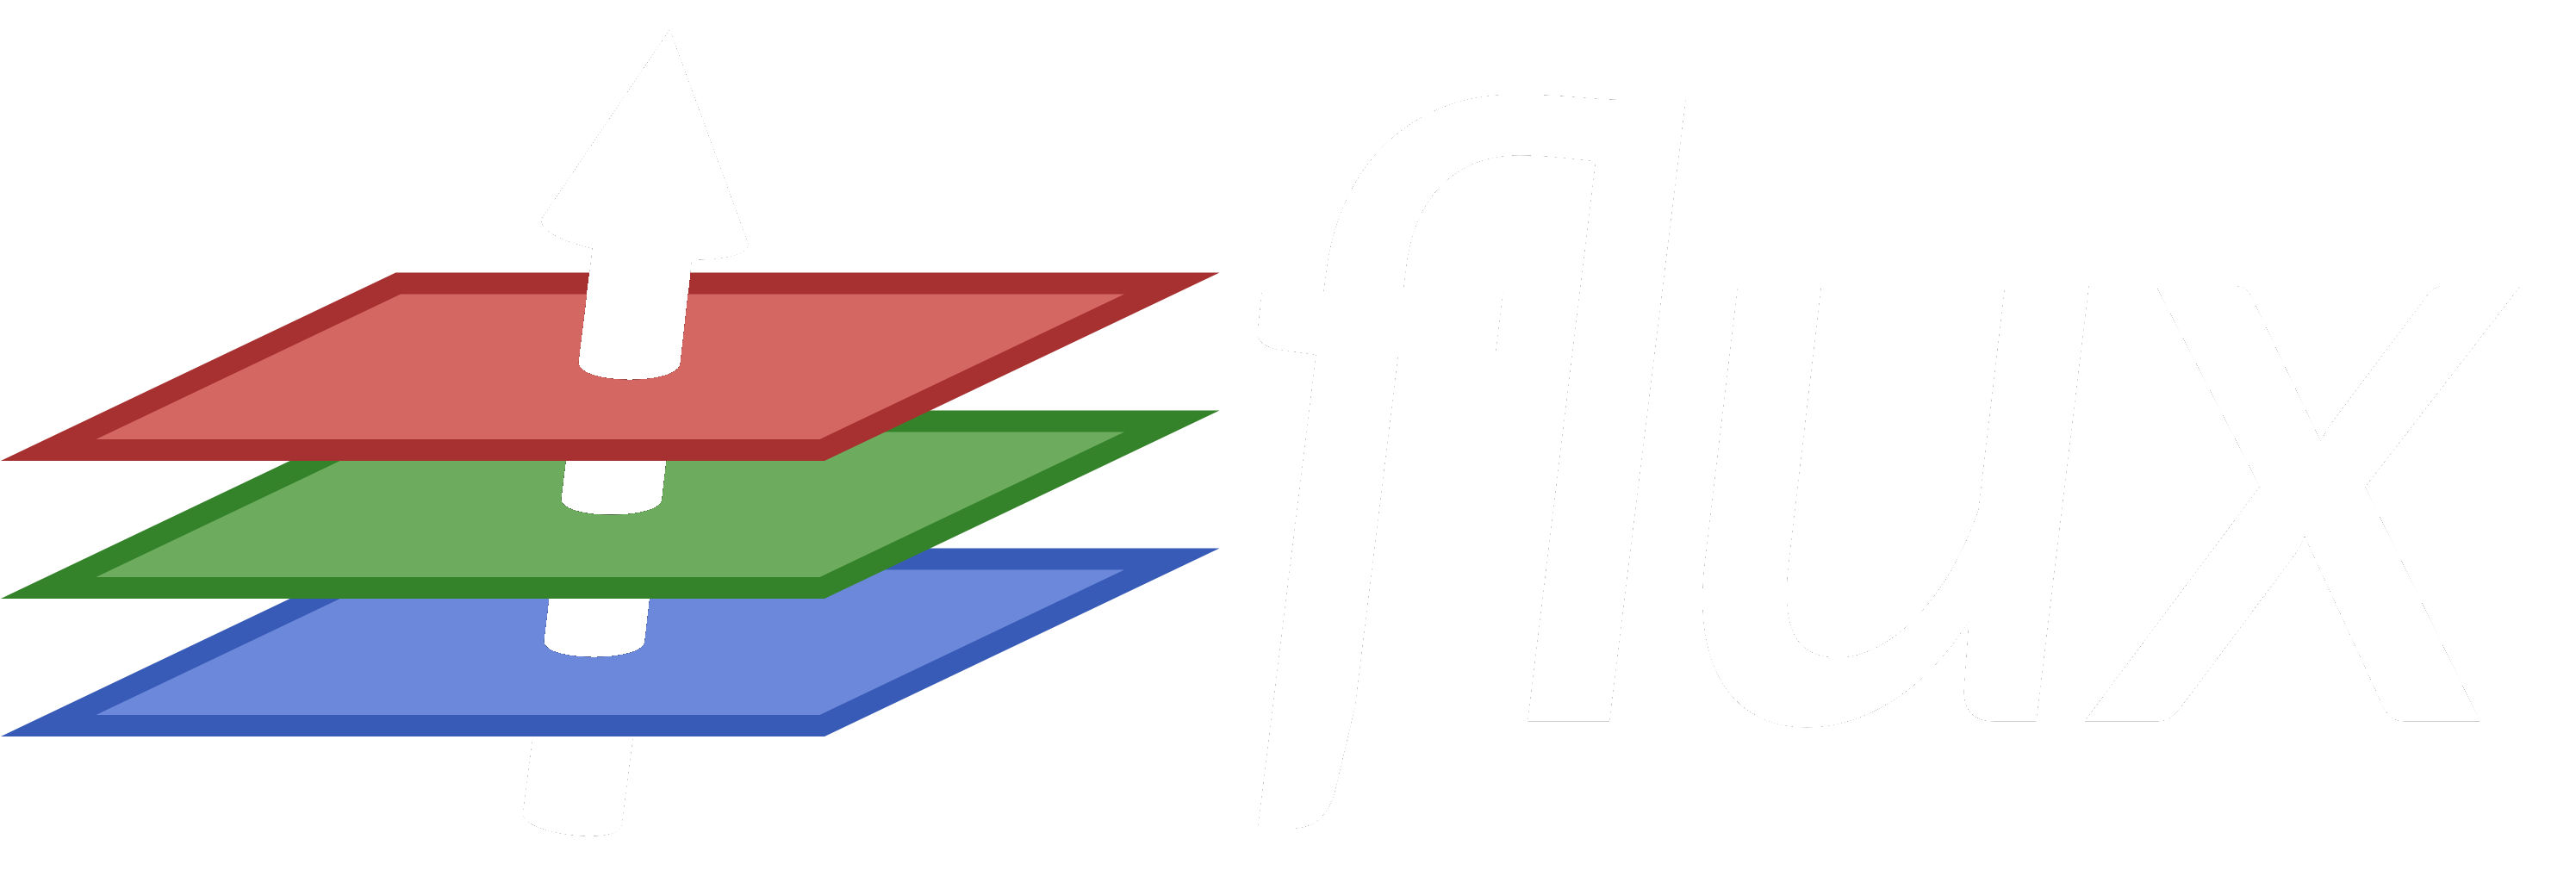 Shields io. Fluxus logo.